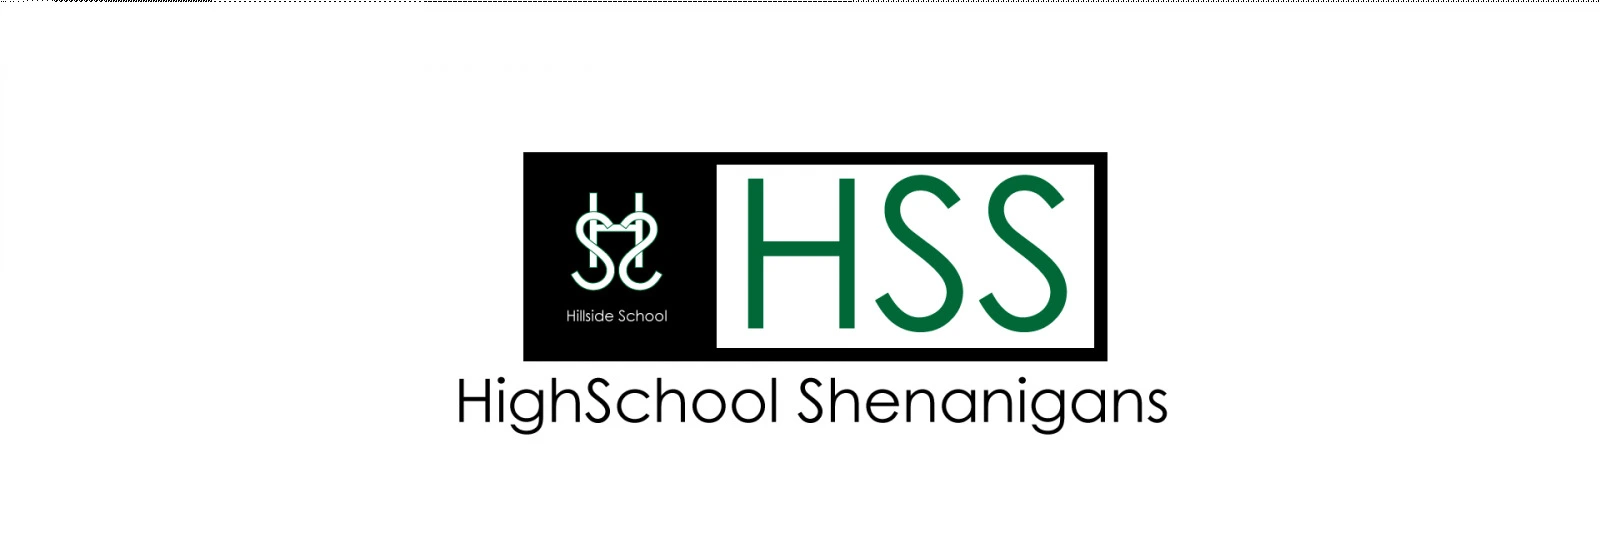 HSS -HighSchool Shenanigans- [v0.1.1 (bugfix)] main image